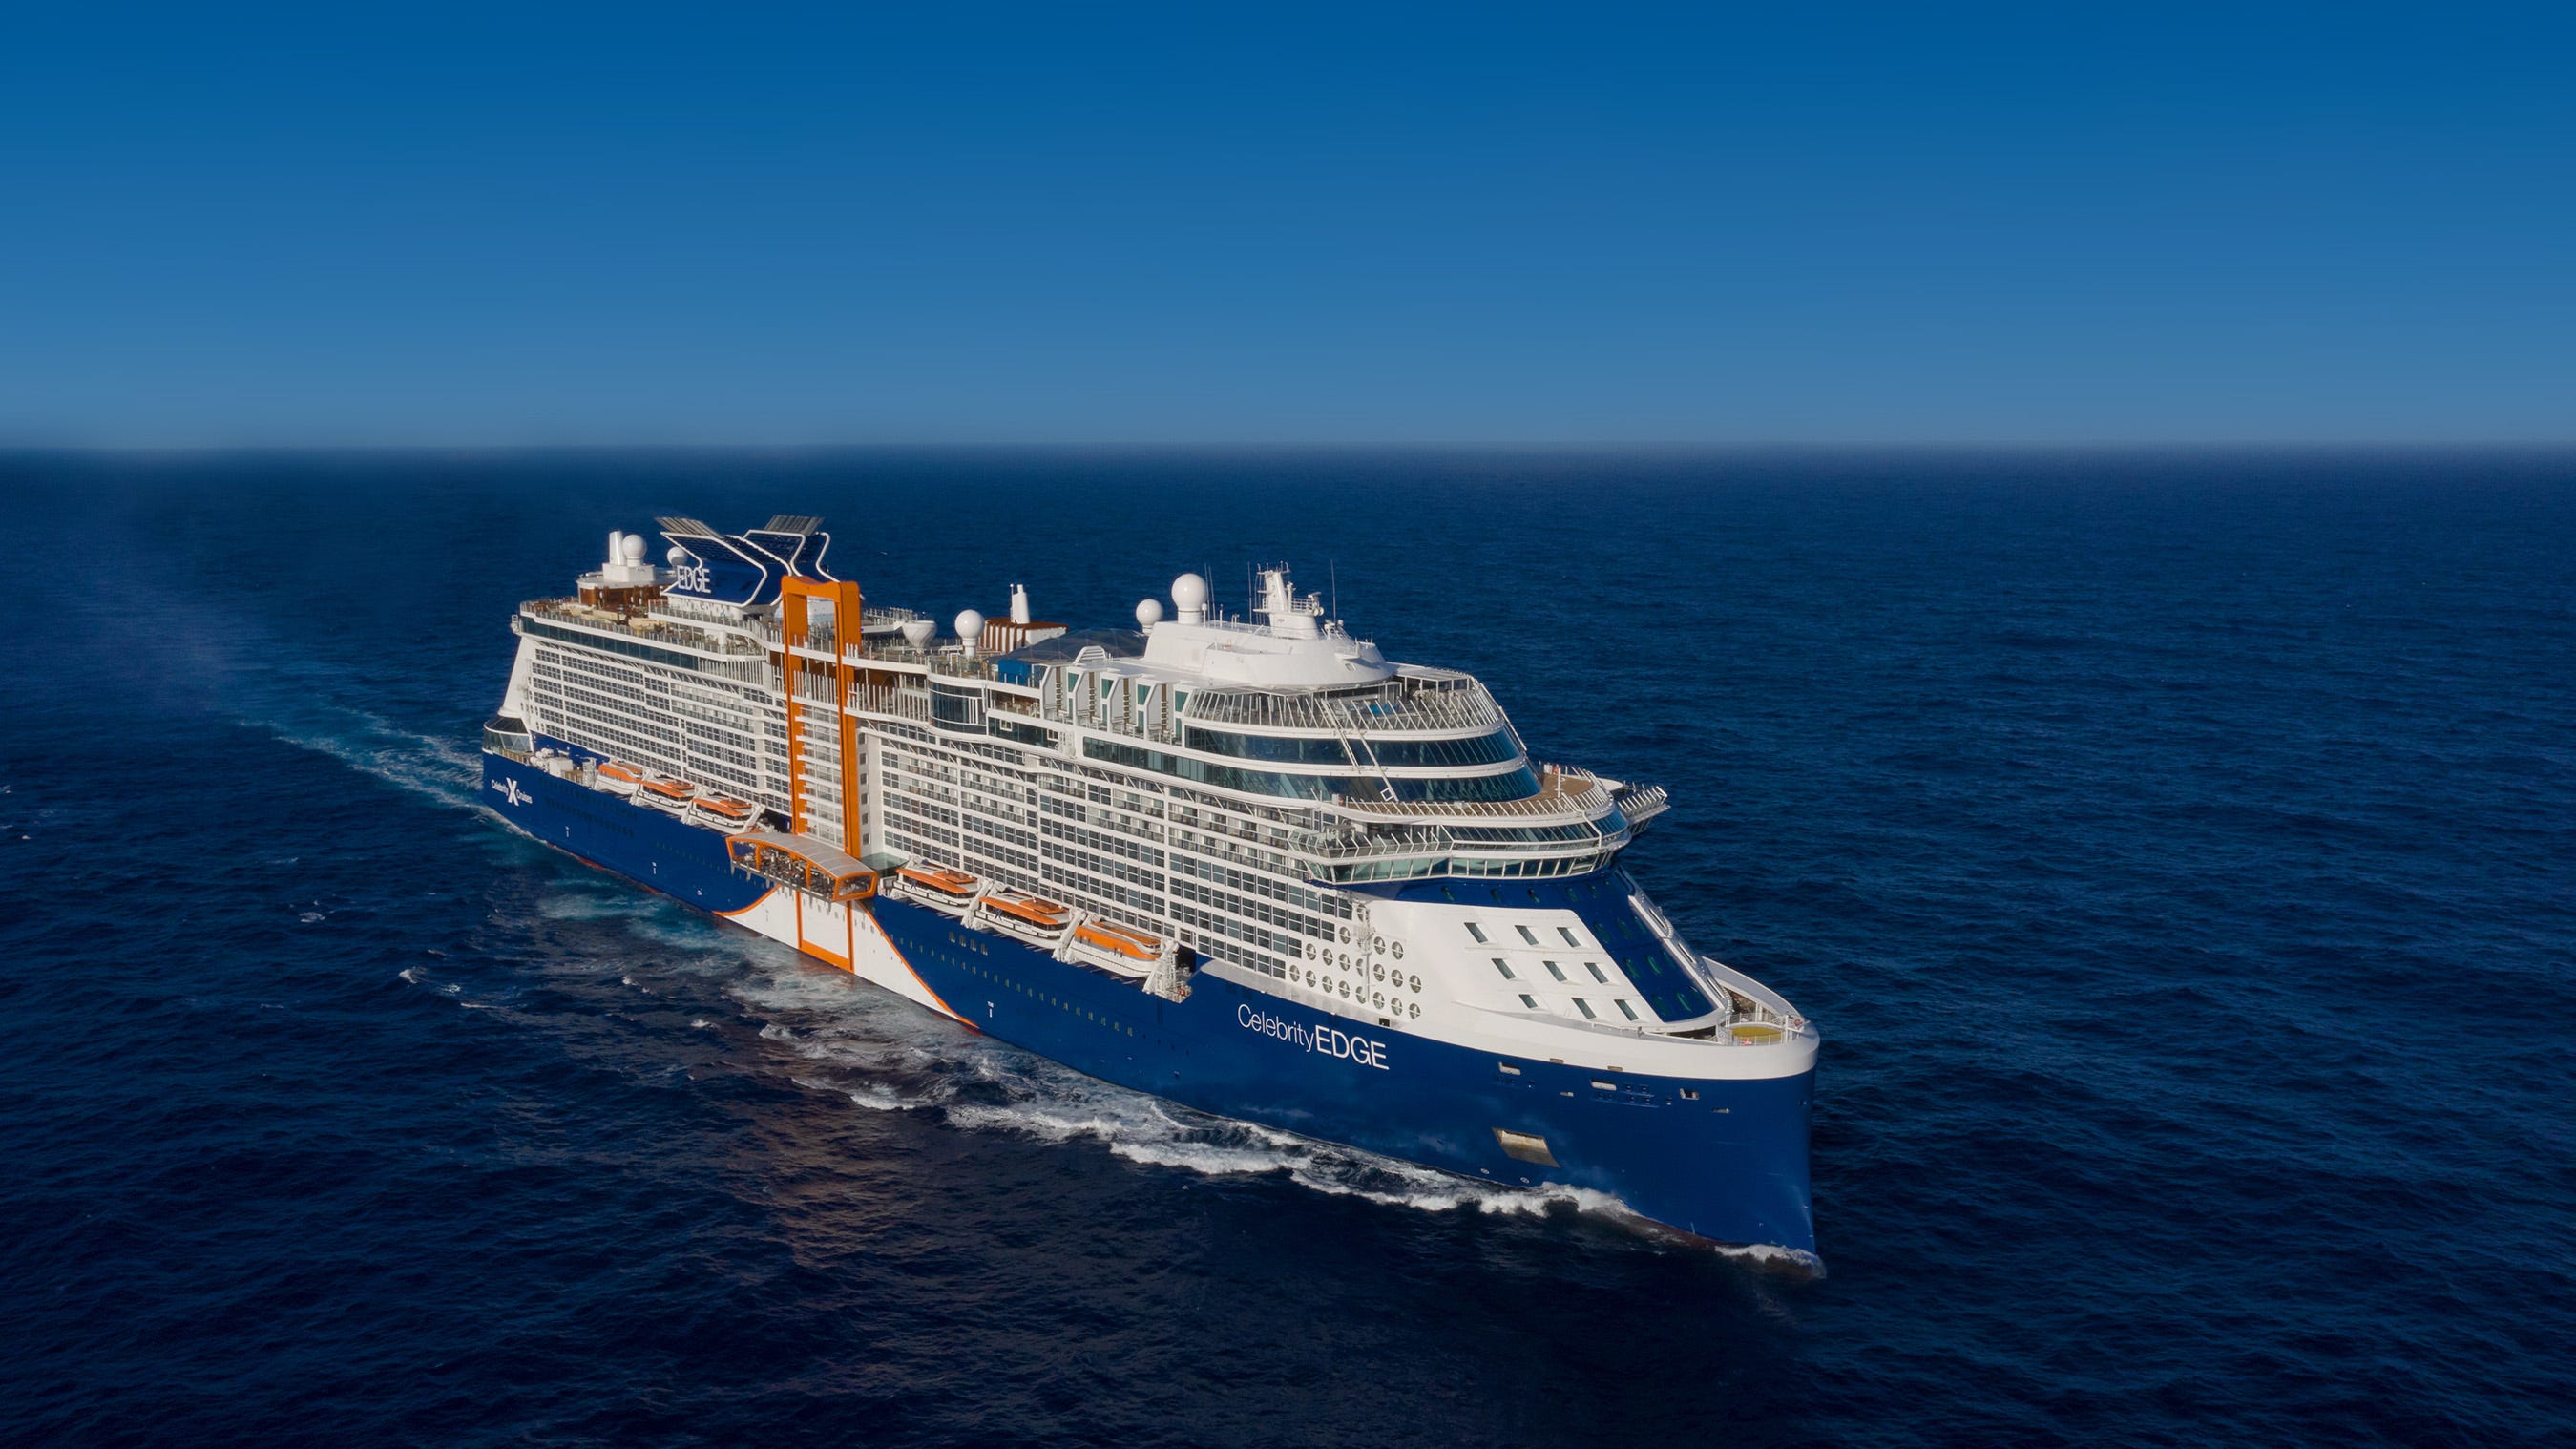 Celebrity Edge: Celebrity Cruises' groundbreaking new ship in photos